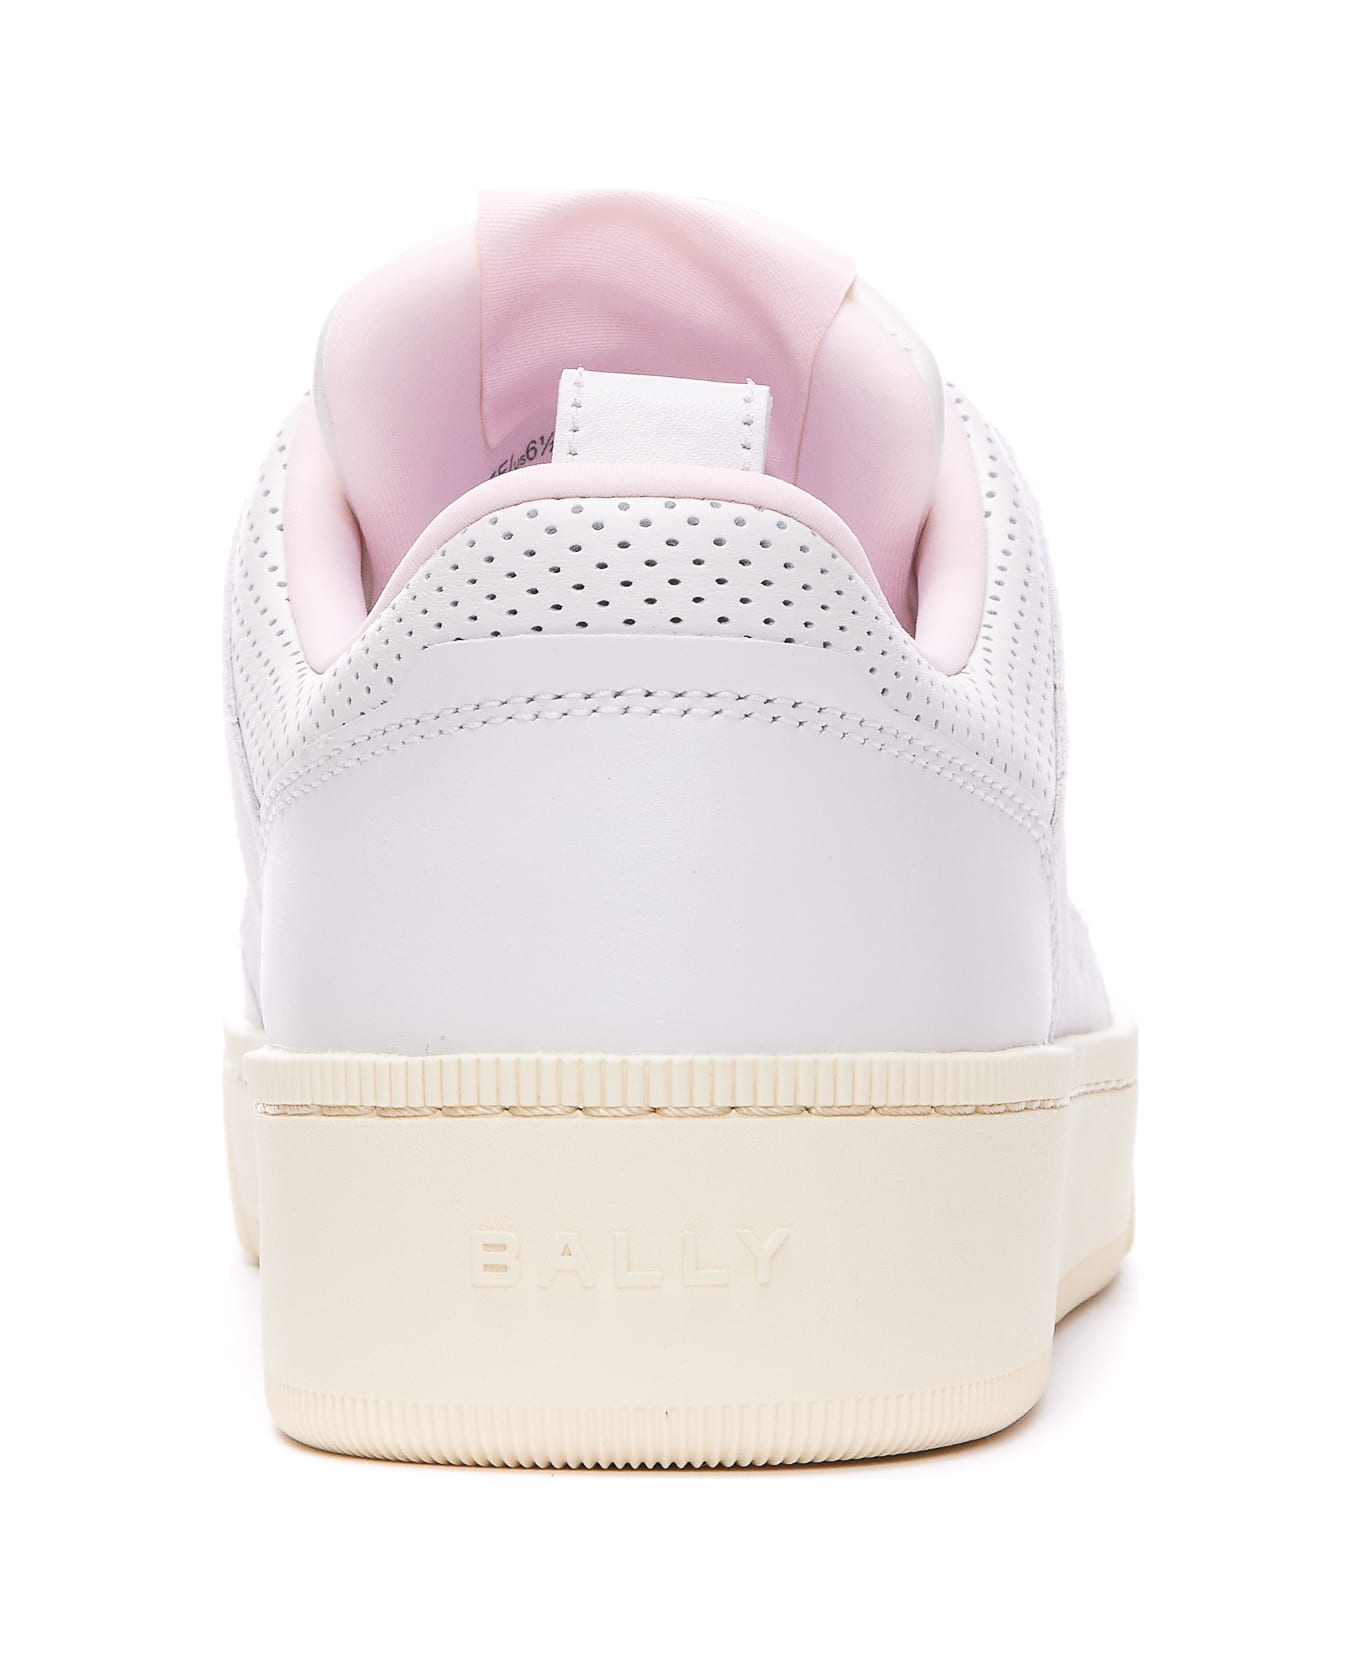 Bally Riweira Sneakers - White/rosa50